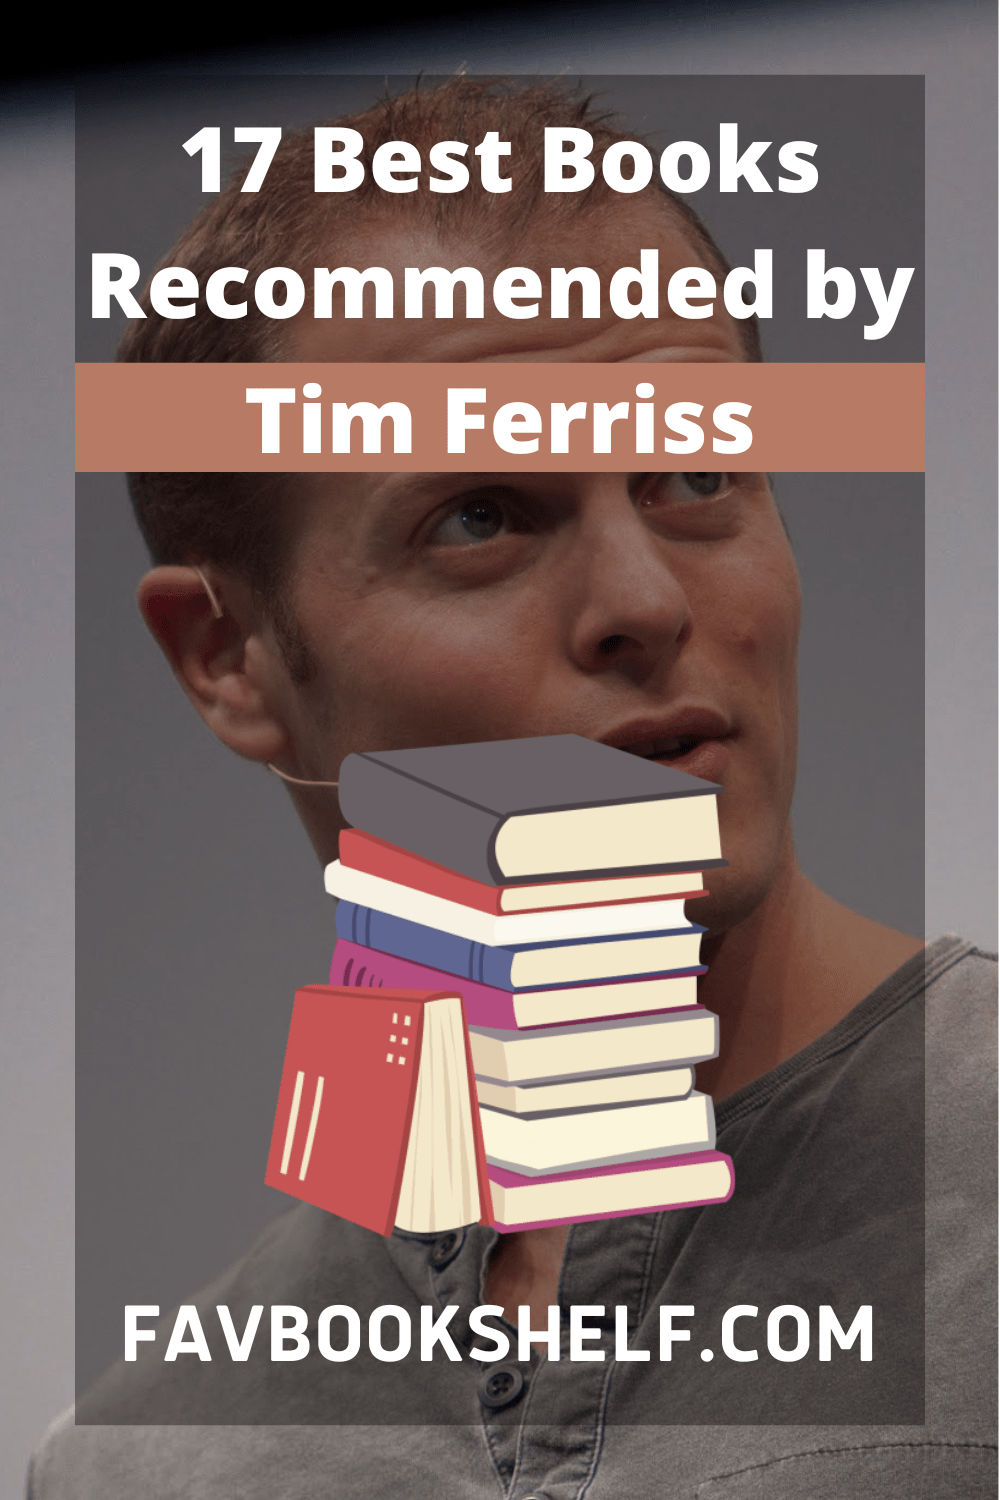 The 17 Best Books by Tim Ferriss Favbookshelf FAVBOOKSHELF